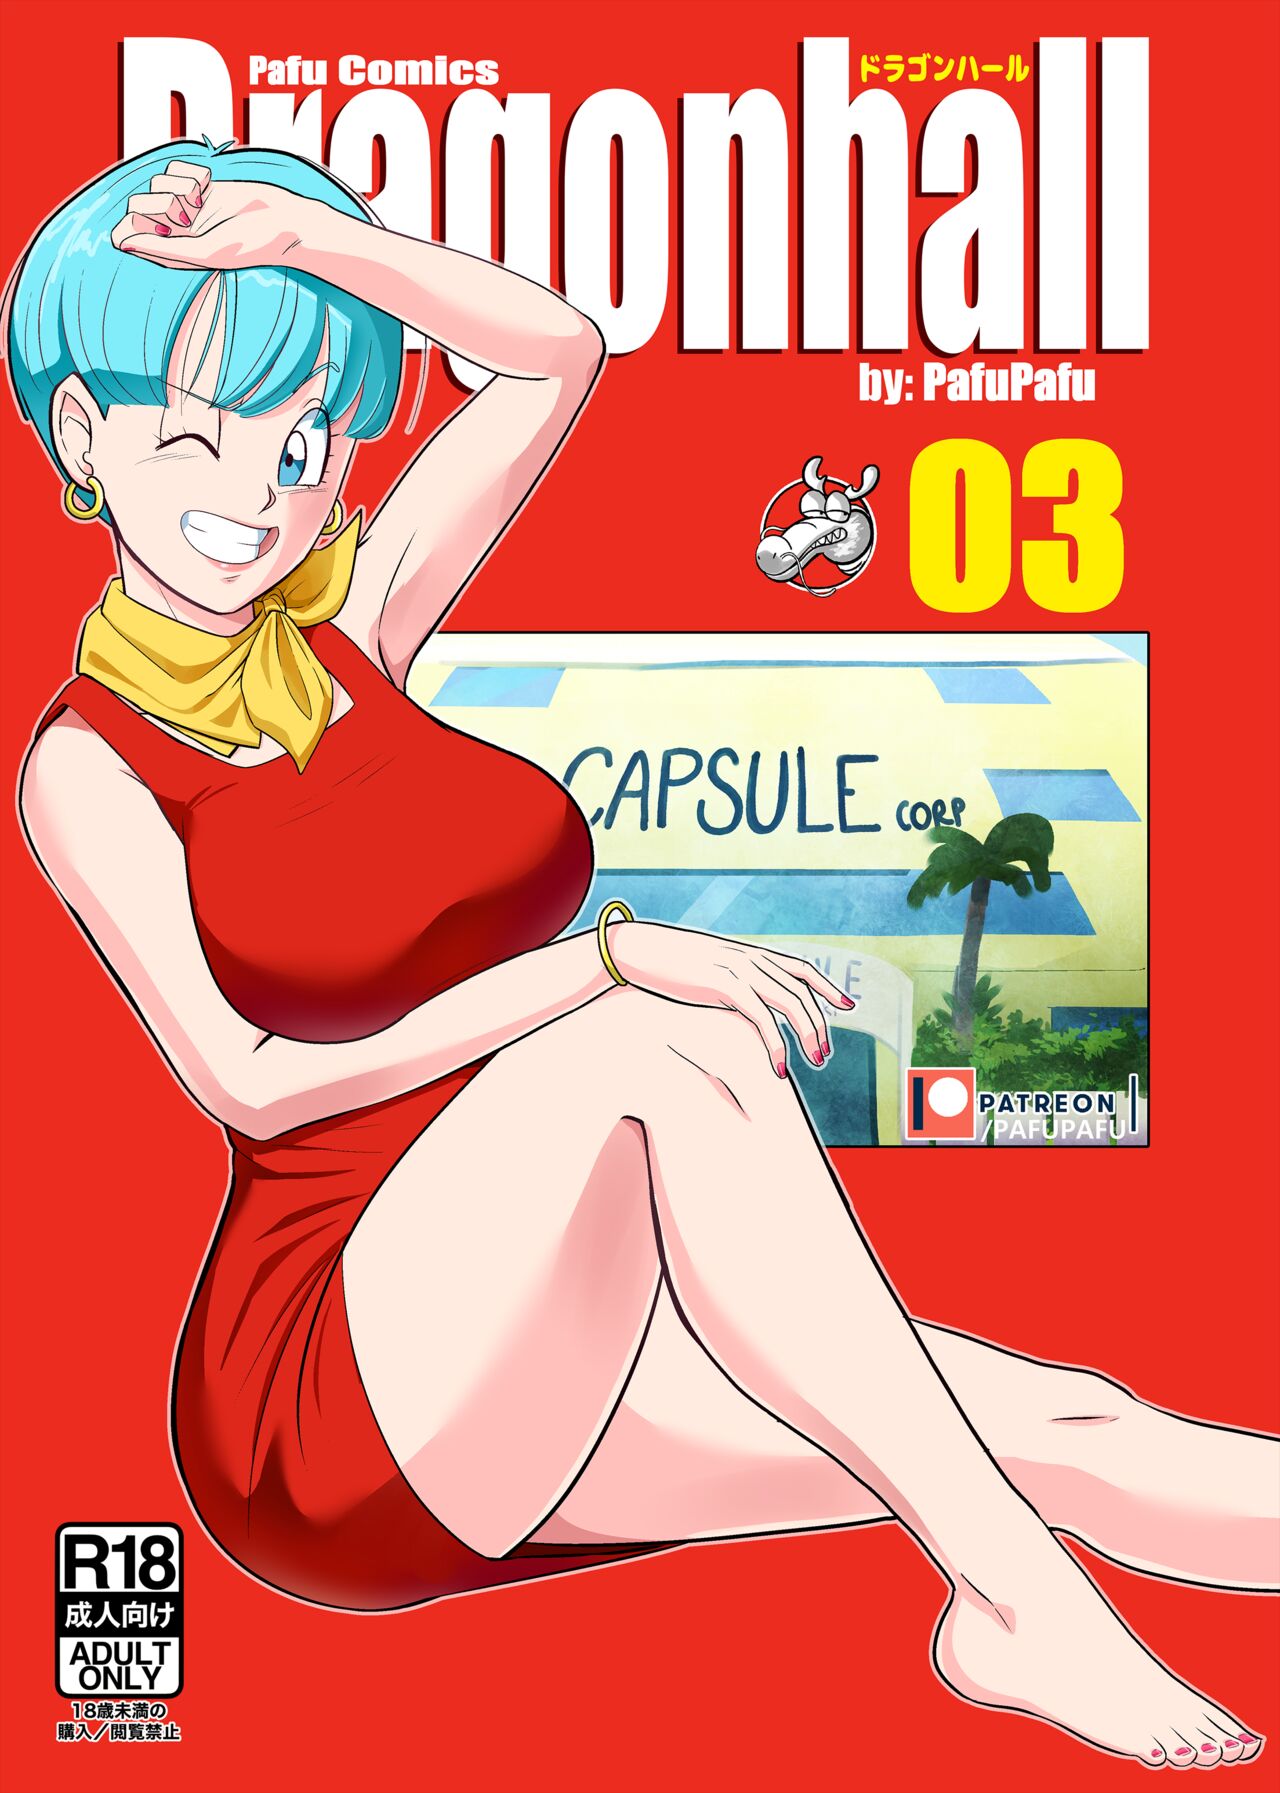 Bulma Dragon Ball Z Cartoon Porn - Gohan vs Bulma! (Dragon Ball Z) [PafuPafu] - Porn Cartoon Comics